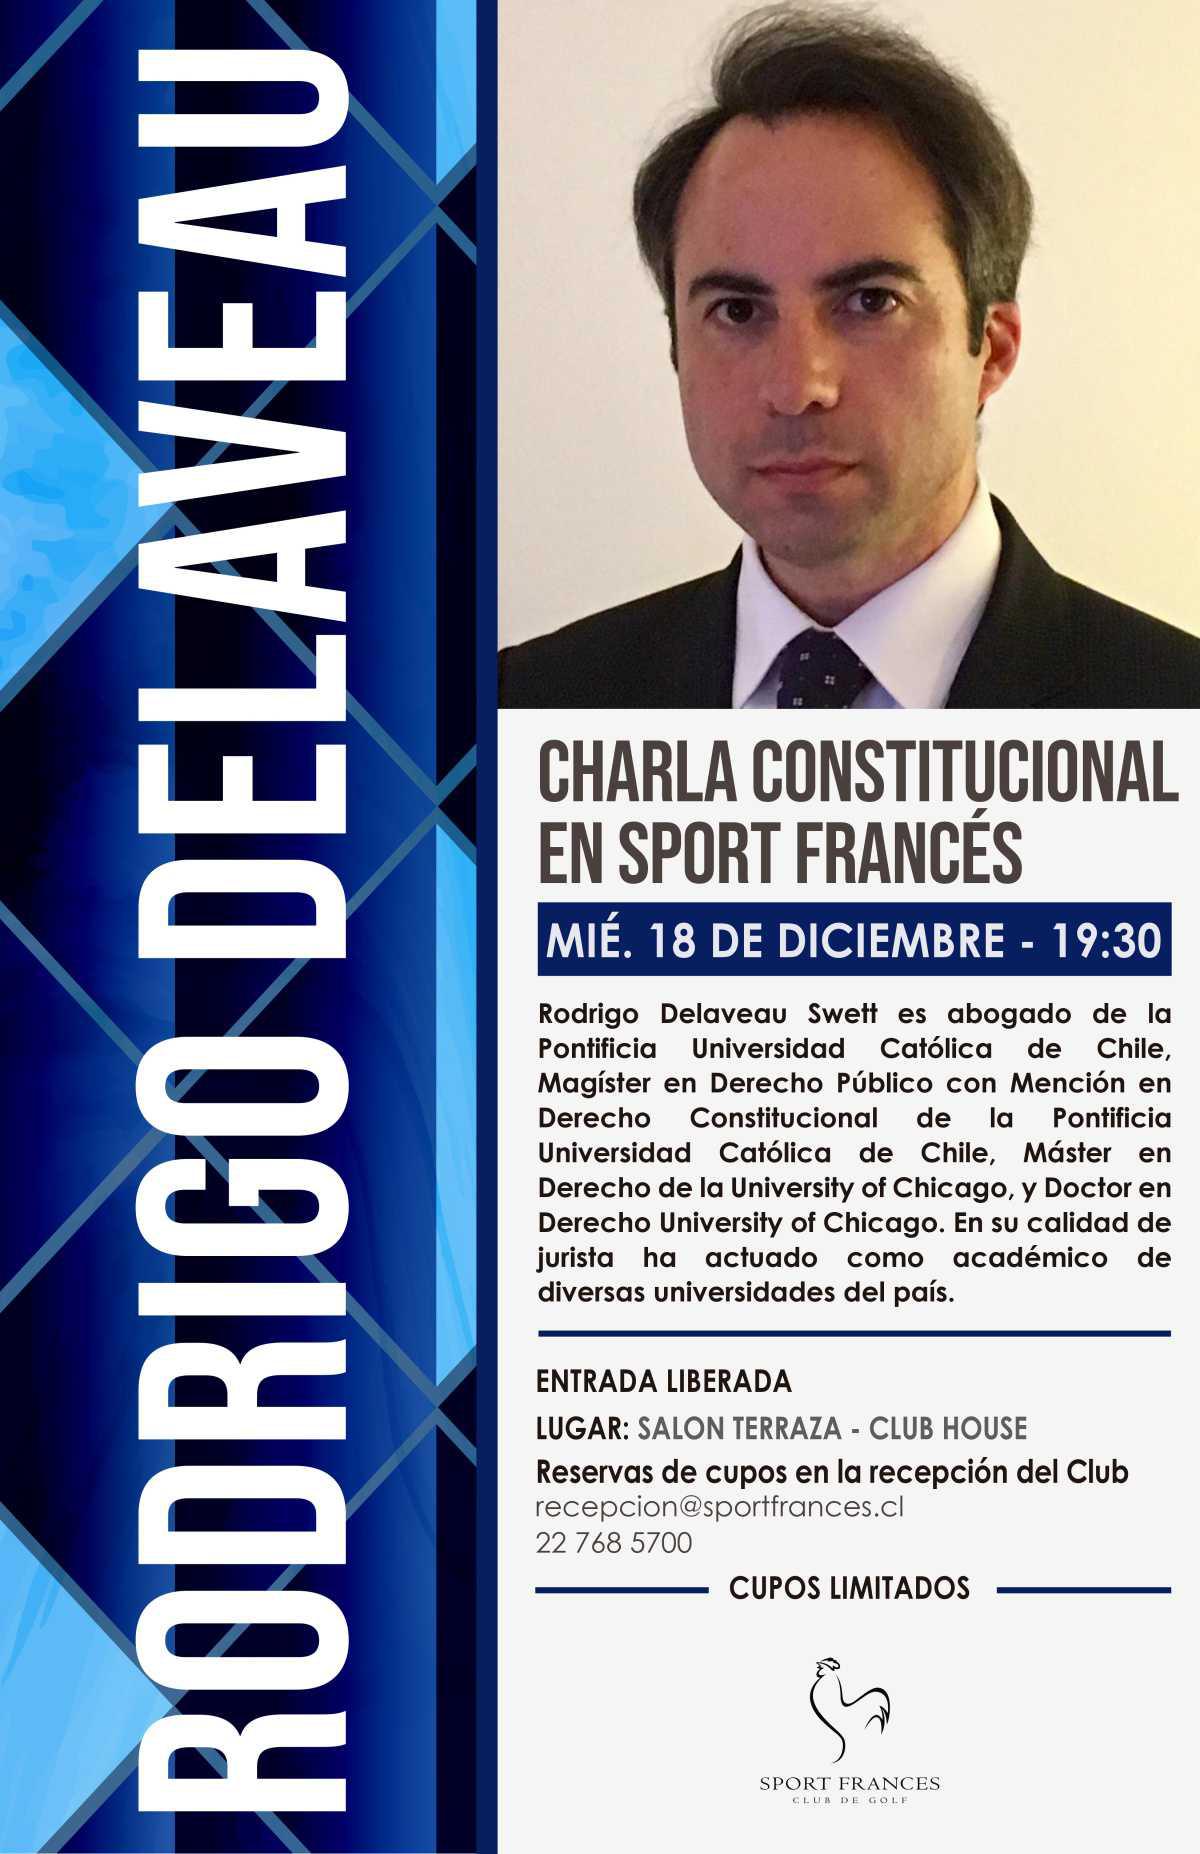 Te invitamos a una interesante charla constitucional junto a Rodrigo Delaveau